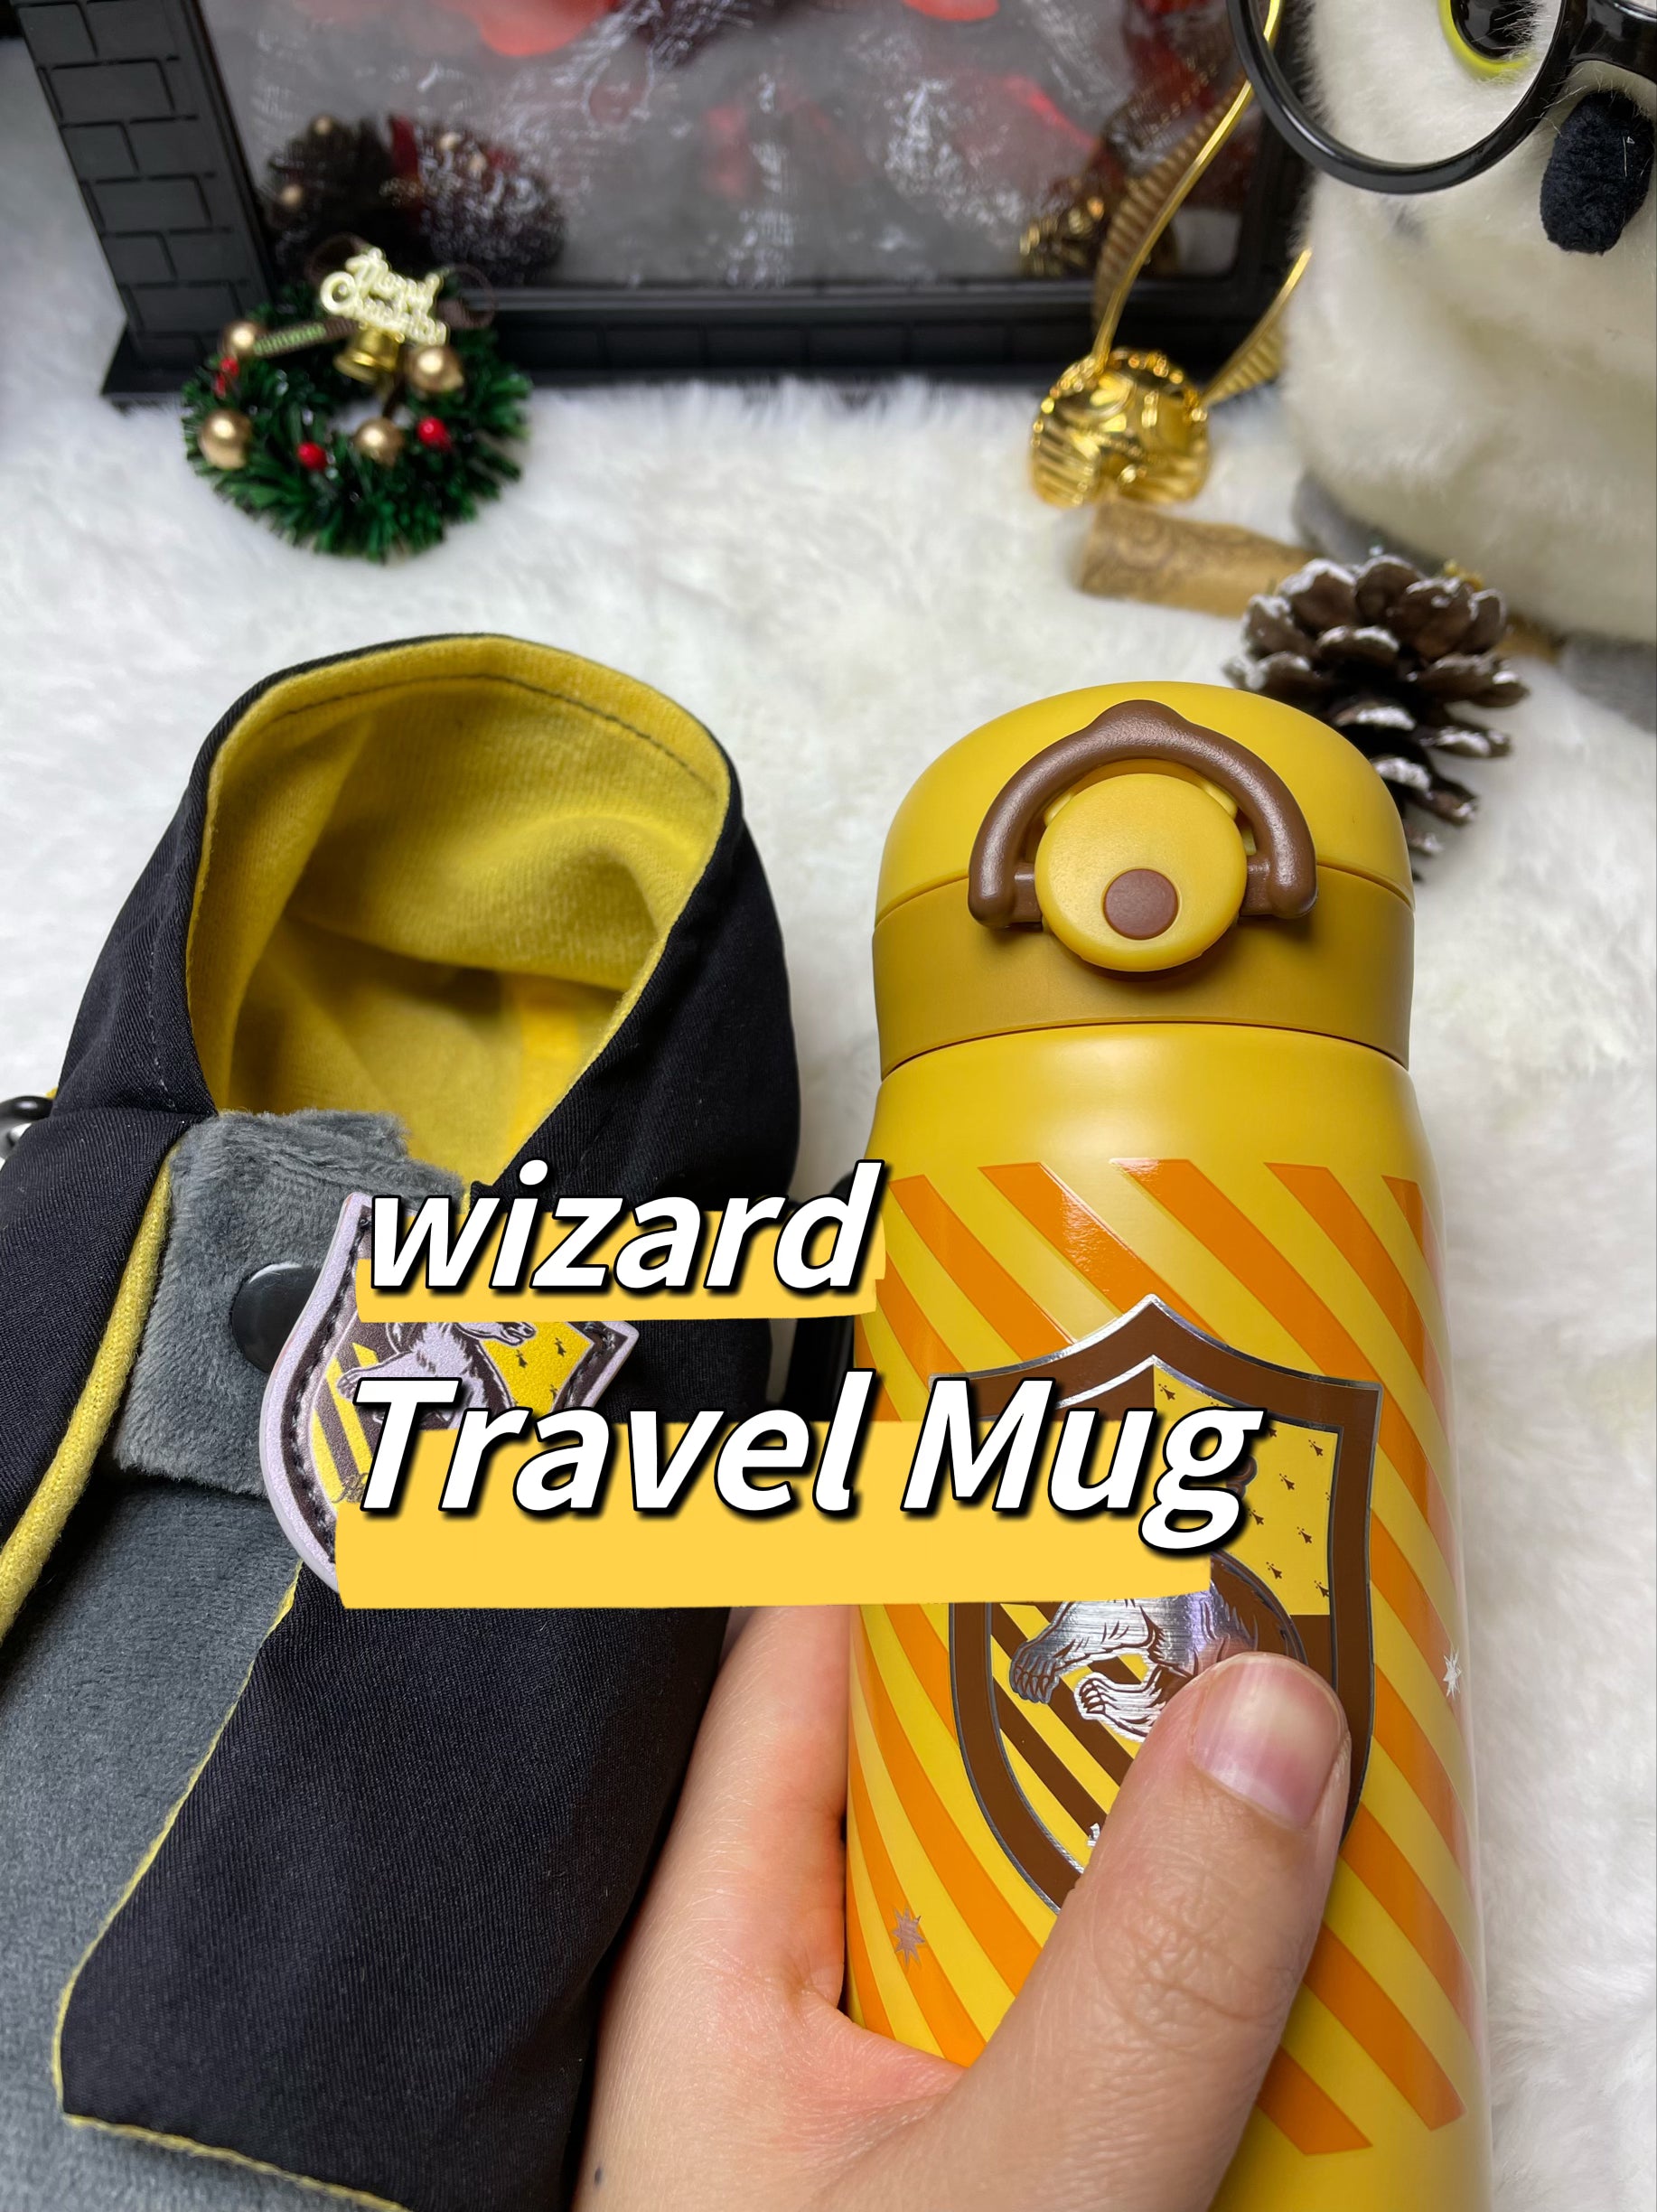 Wizard travel mug